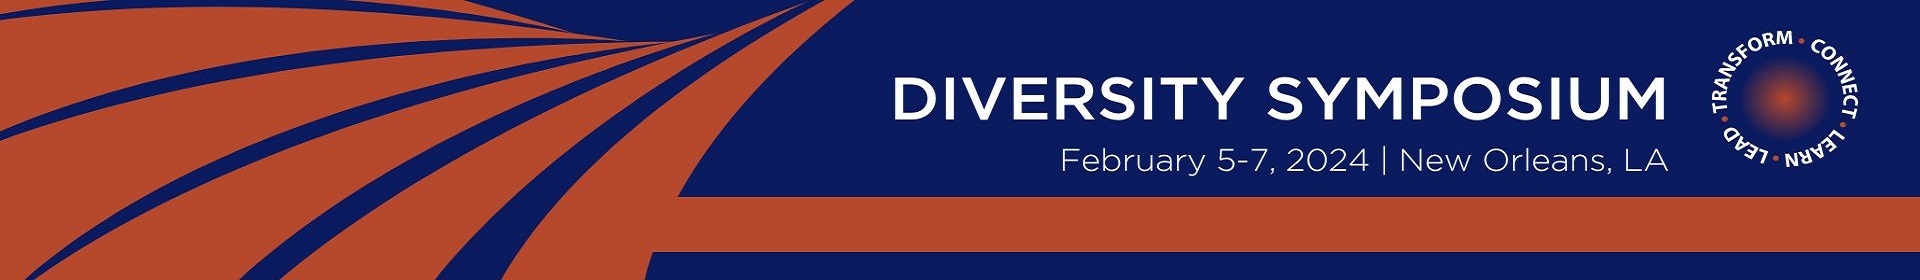 Diversity Symposium Event Banner